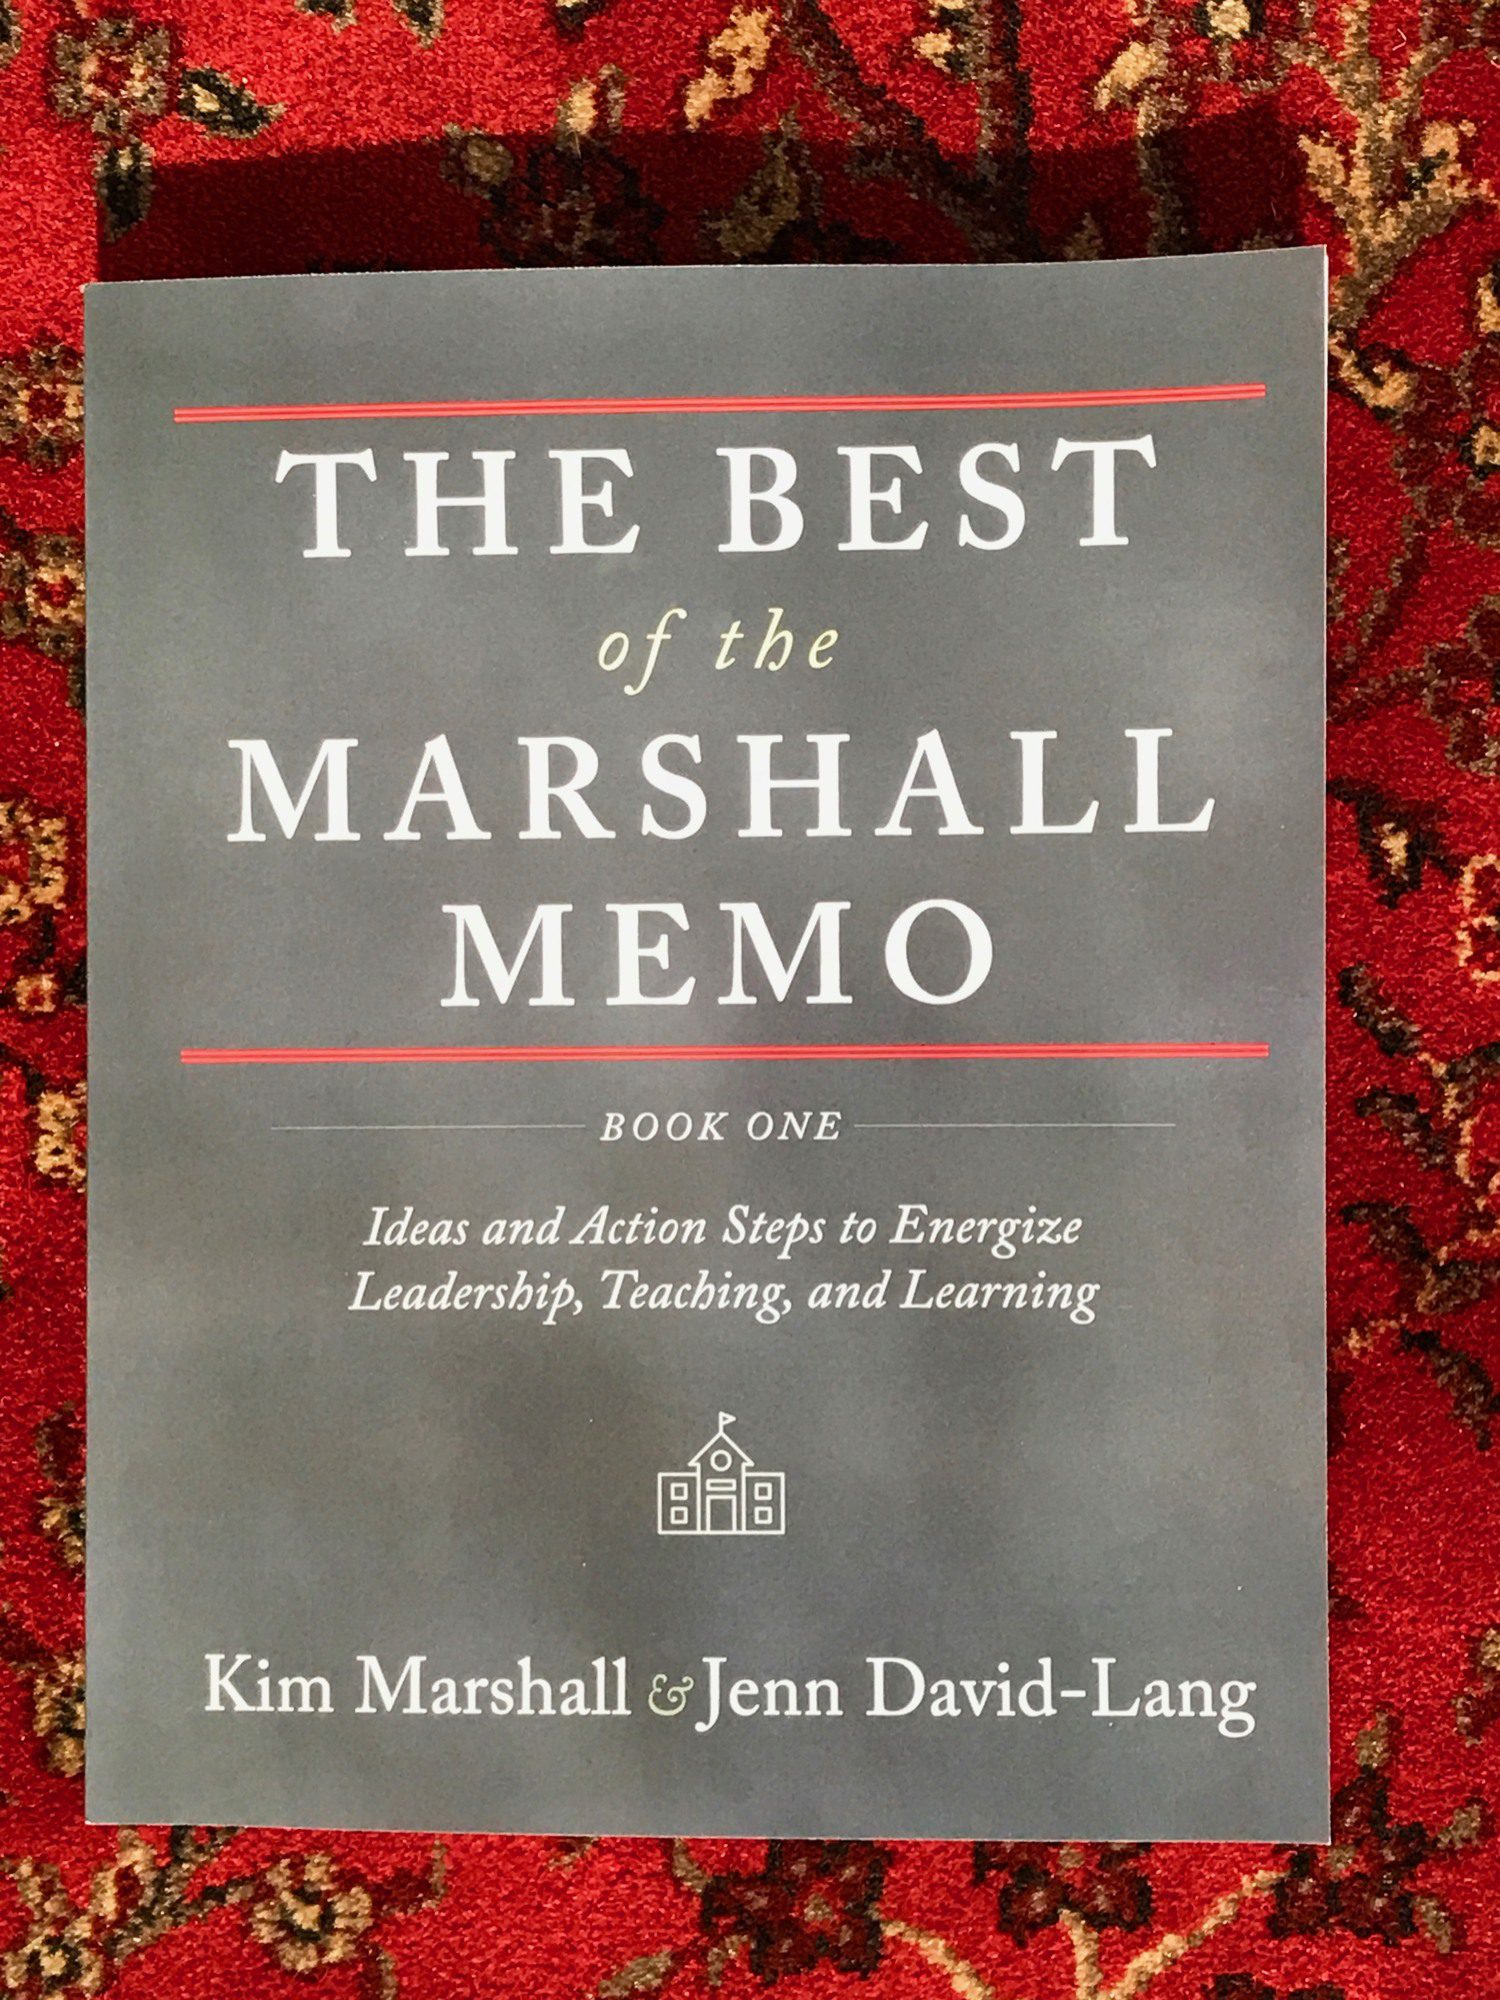 Marshall Memo professional development book for school improvement